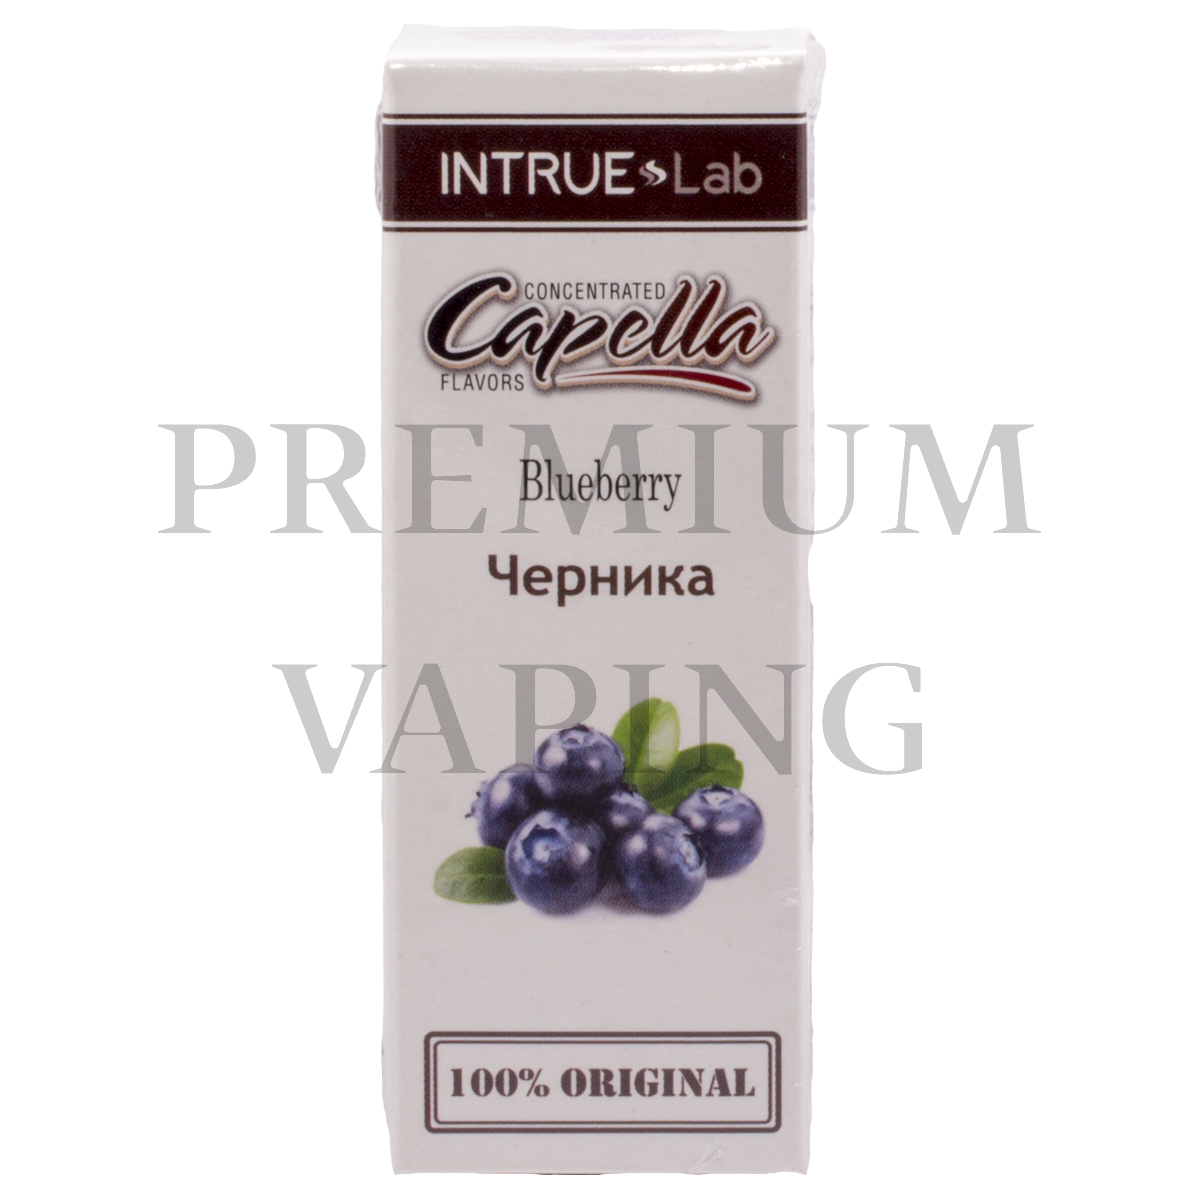 Capella Intrue Lab — Blueberry